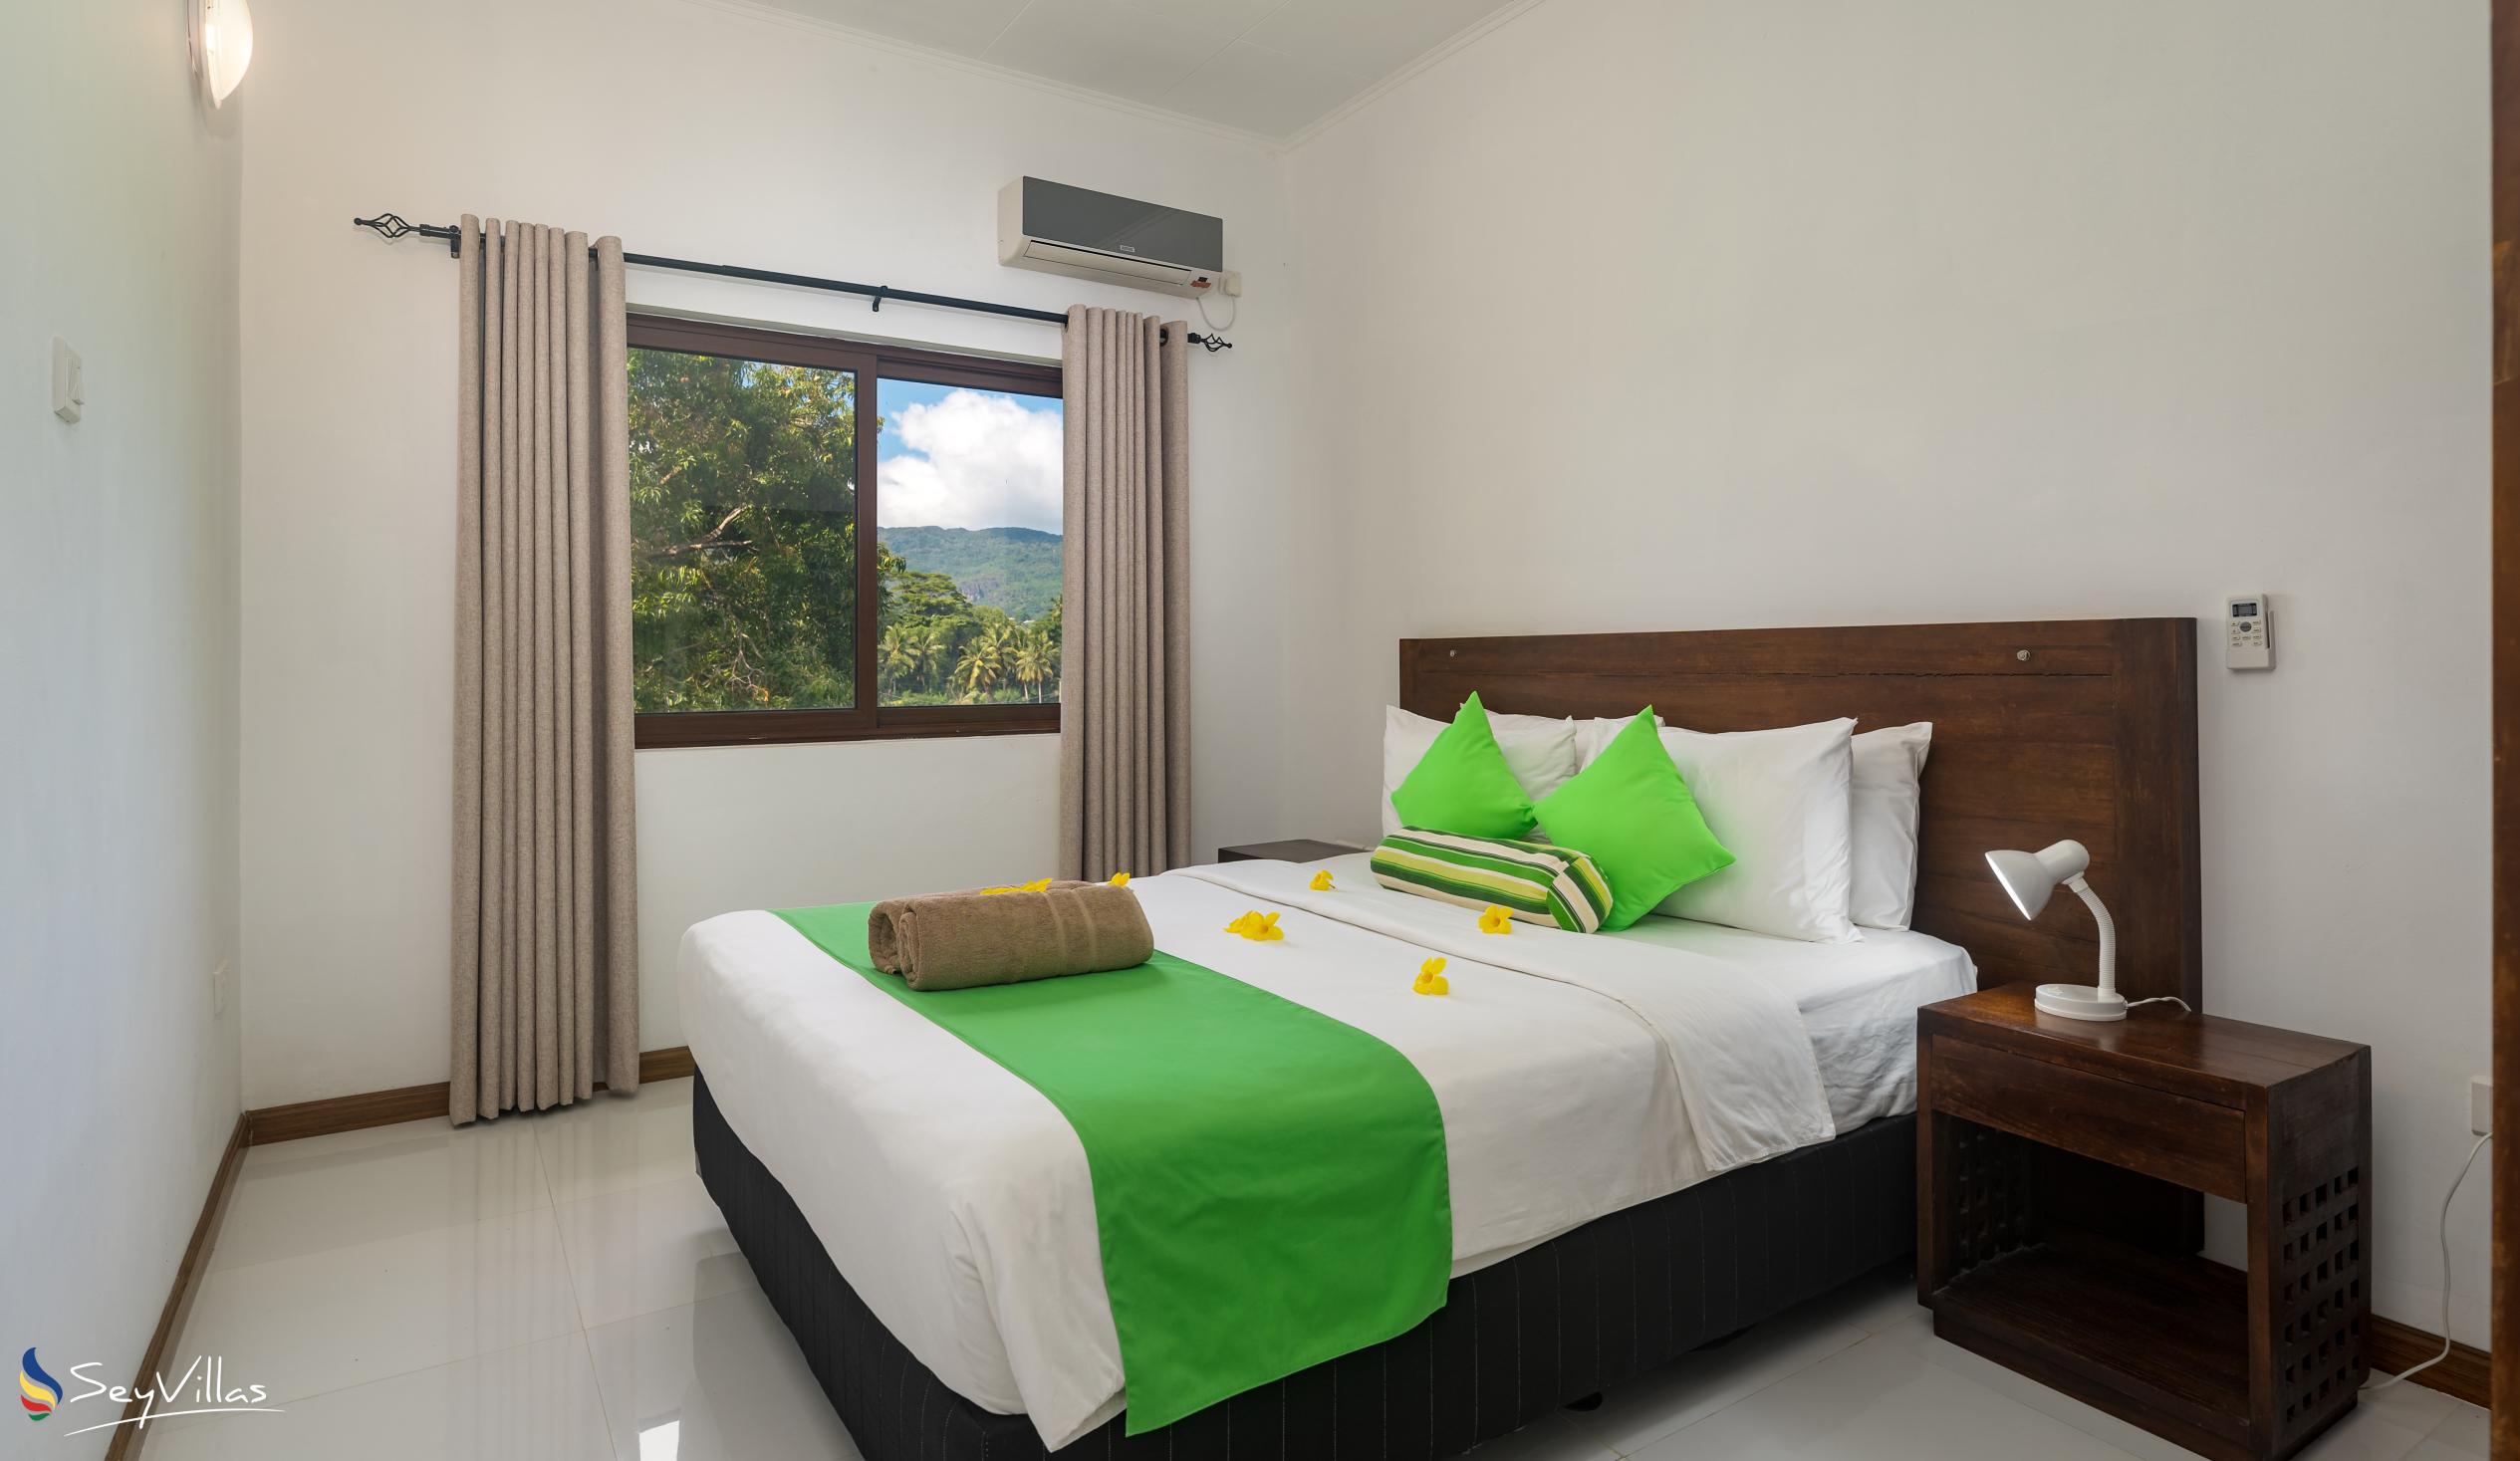 Photo 92: Kanasuk Self Catering Apartments - 2-Bedroom Apartment Lemongrass - Mahé (Seychelles)